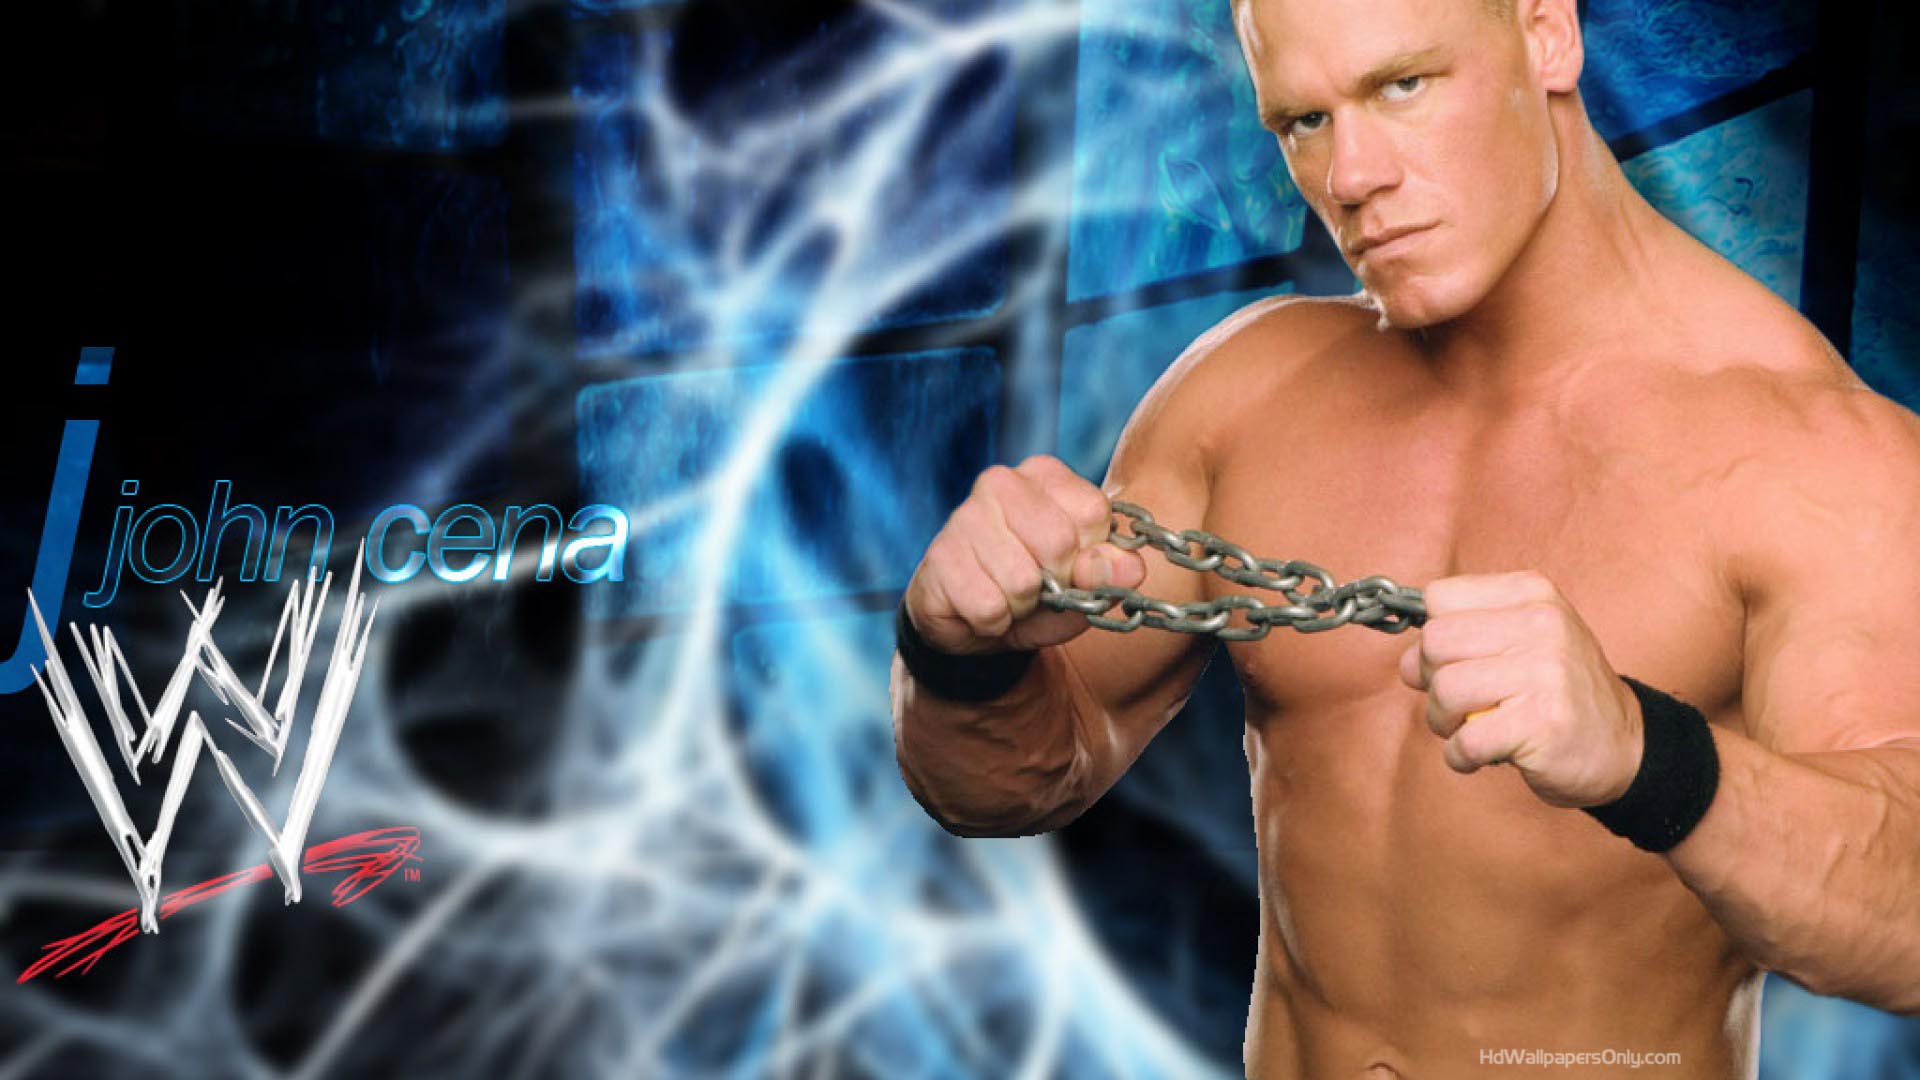 Wallpaper ID 1084322  1080P WWE 2K15 WWE John Cena free download